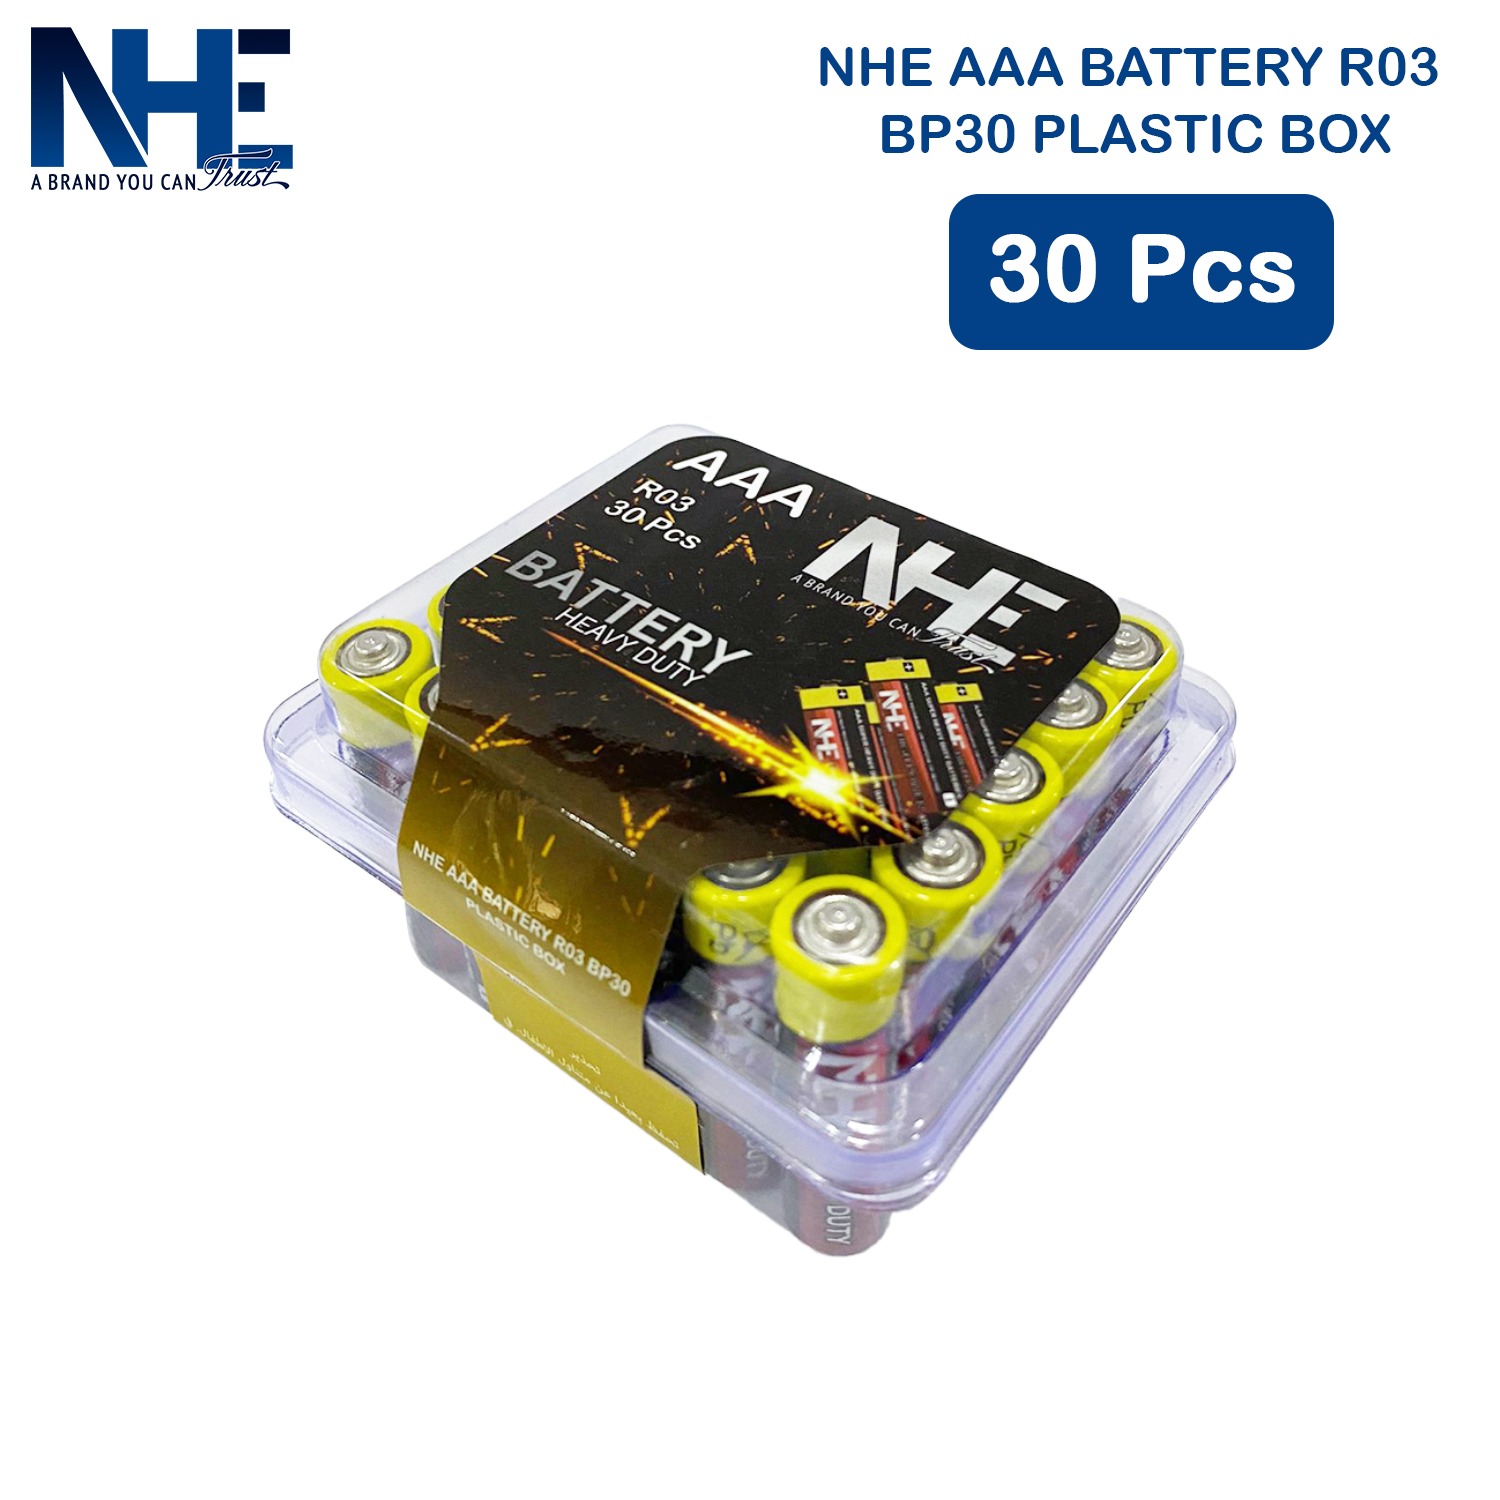 NHE AAA Battery R03 BP30 Plastic Box